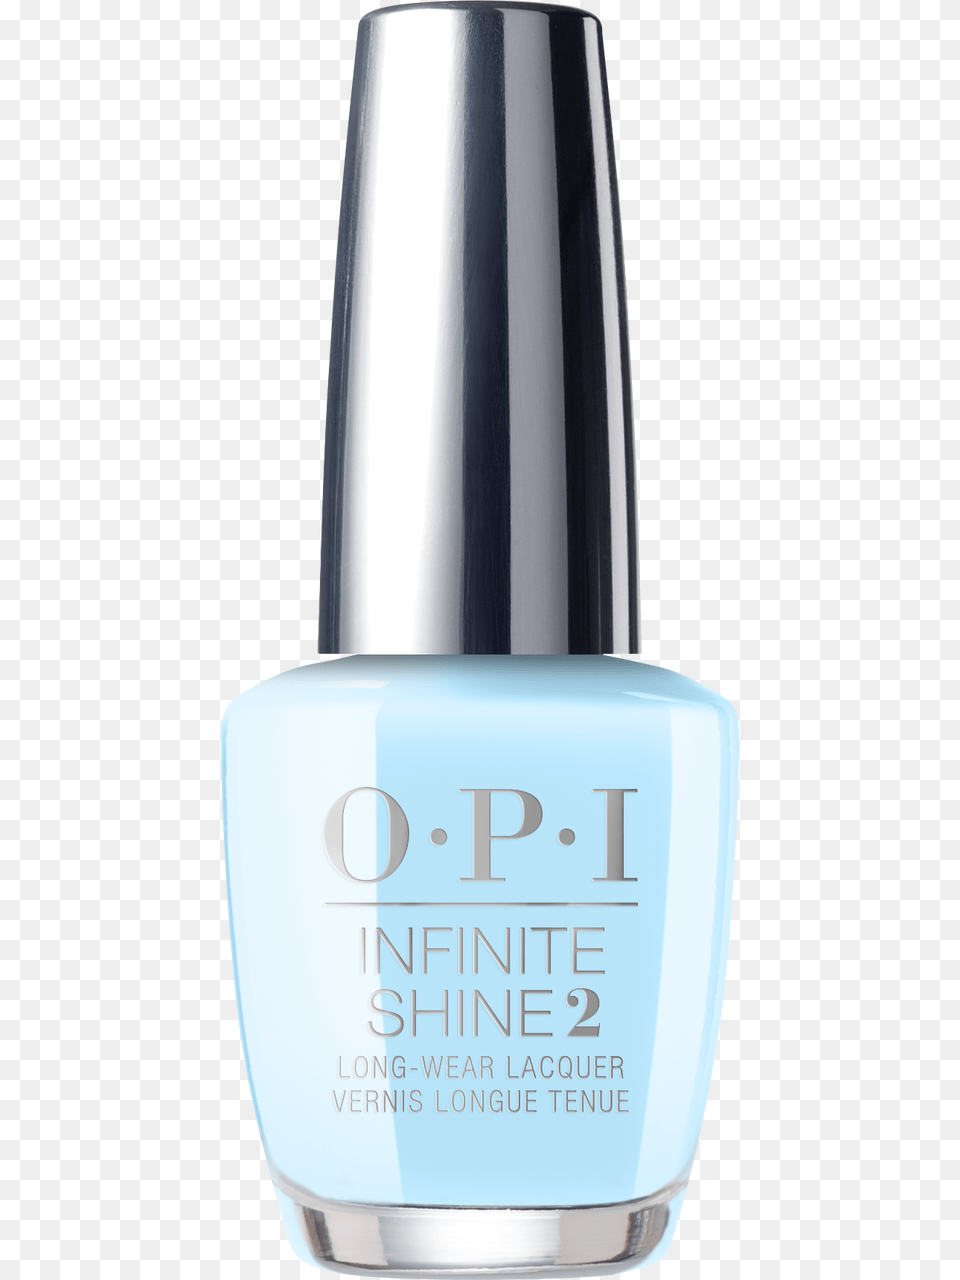 Opi Infinite Shine Opi Infinite Shine Don T Bossa Nova, Cosmetics, Bottle, Perfume, Nail Polish Png Image